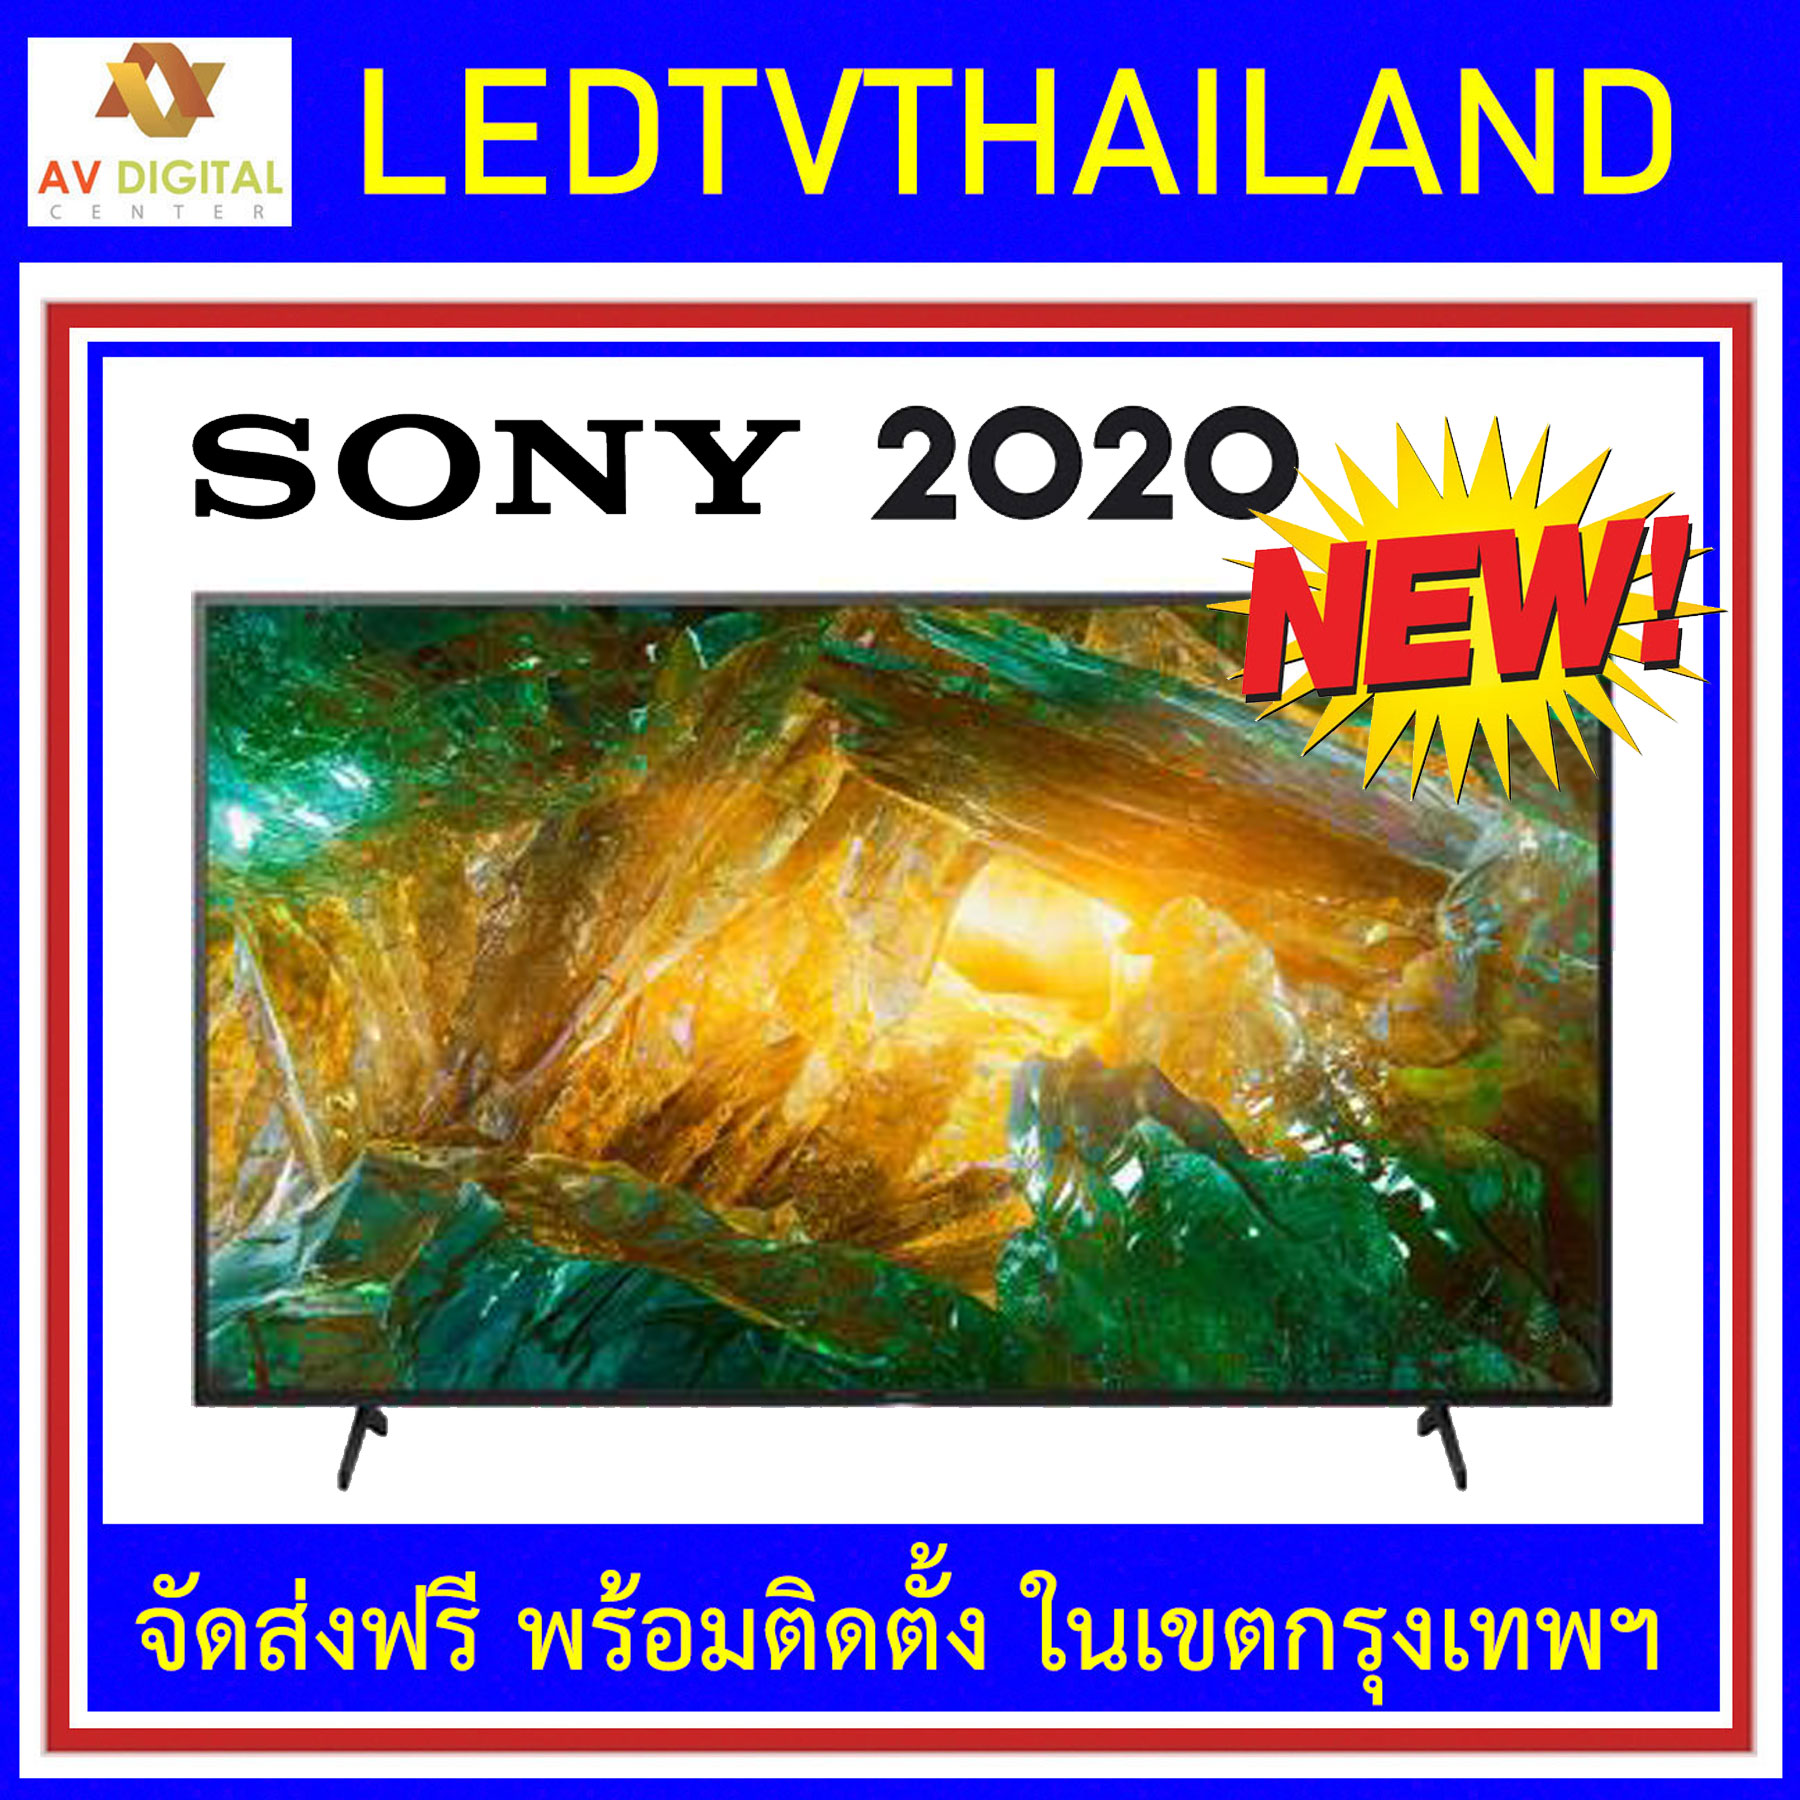 SONY LED TV รุ่น KD-49X8000H X80H  4K Ultra HD  High Dynamic Range (HDR)  สมาร์ททีวี (Android TV) ขนาด 49 นิ้ว 2020